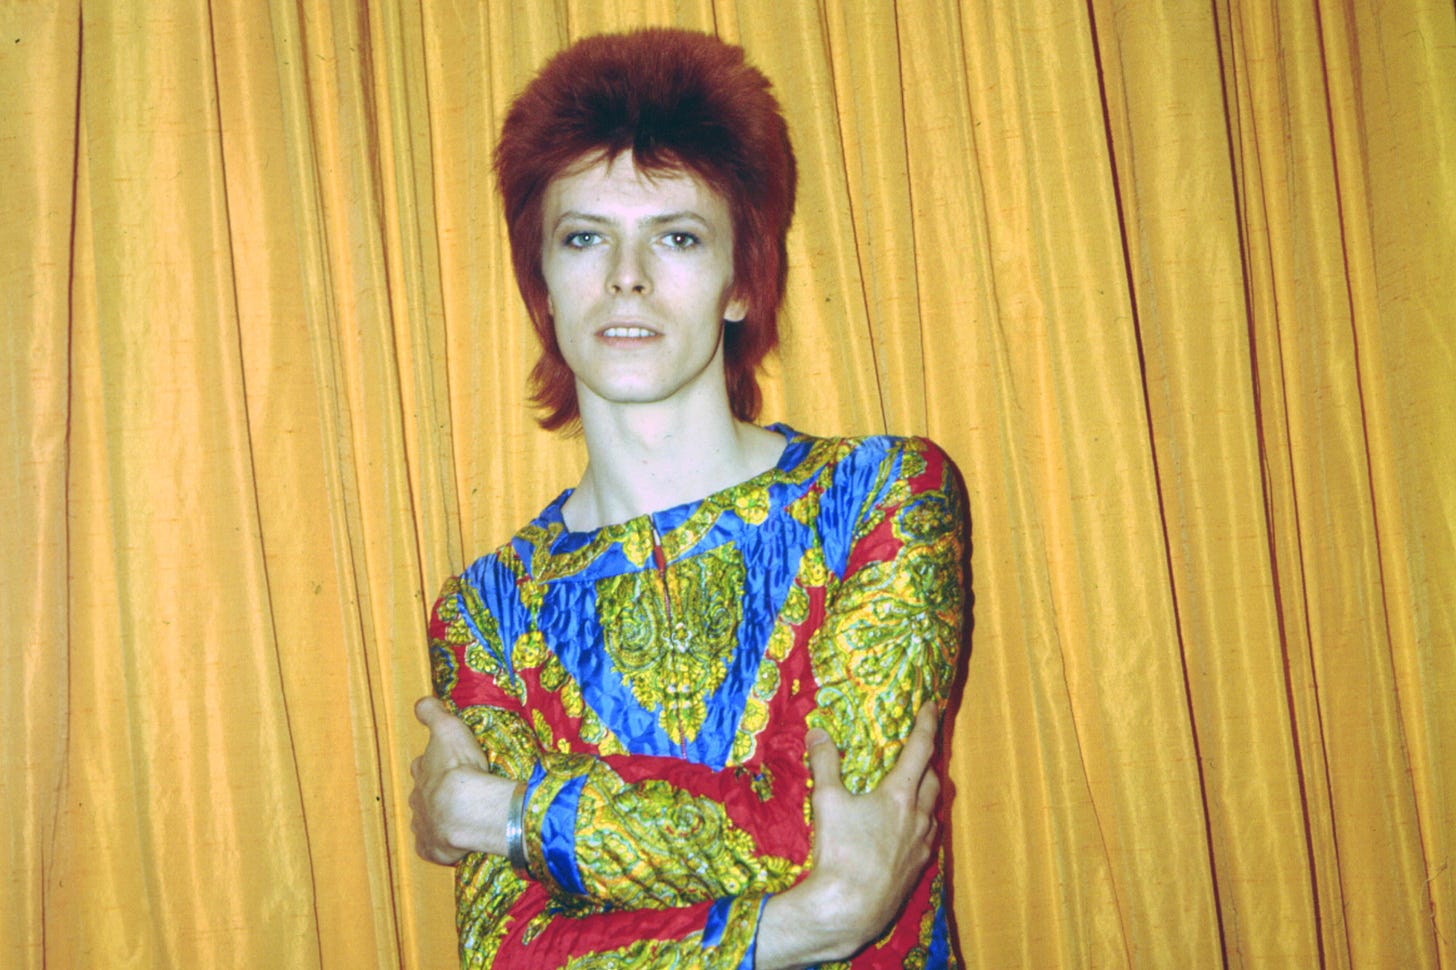 Pop's alter egos, from Ziggy Stardust to Madame X